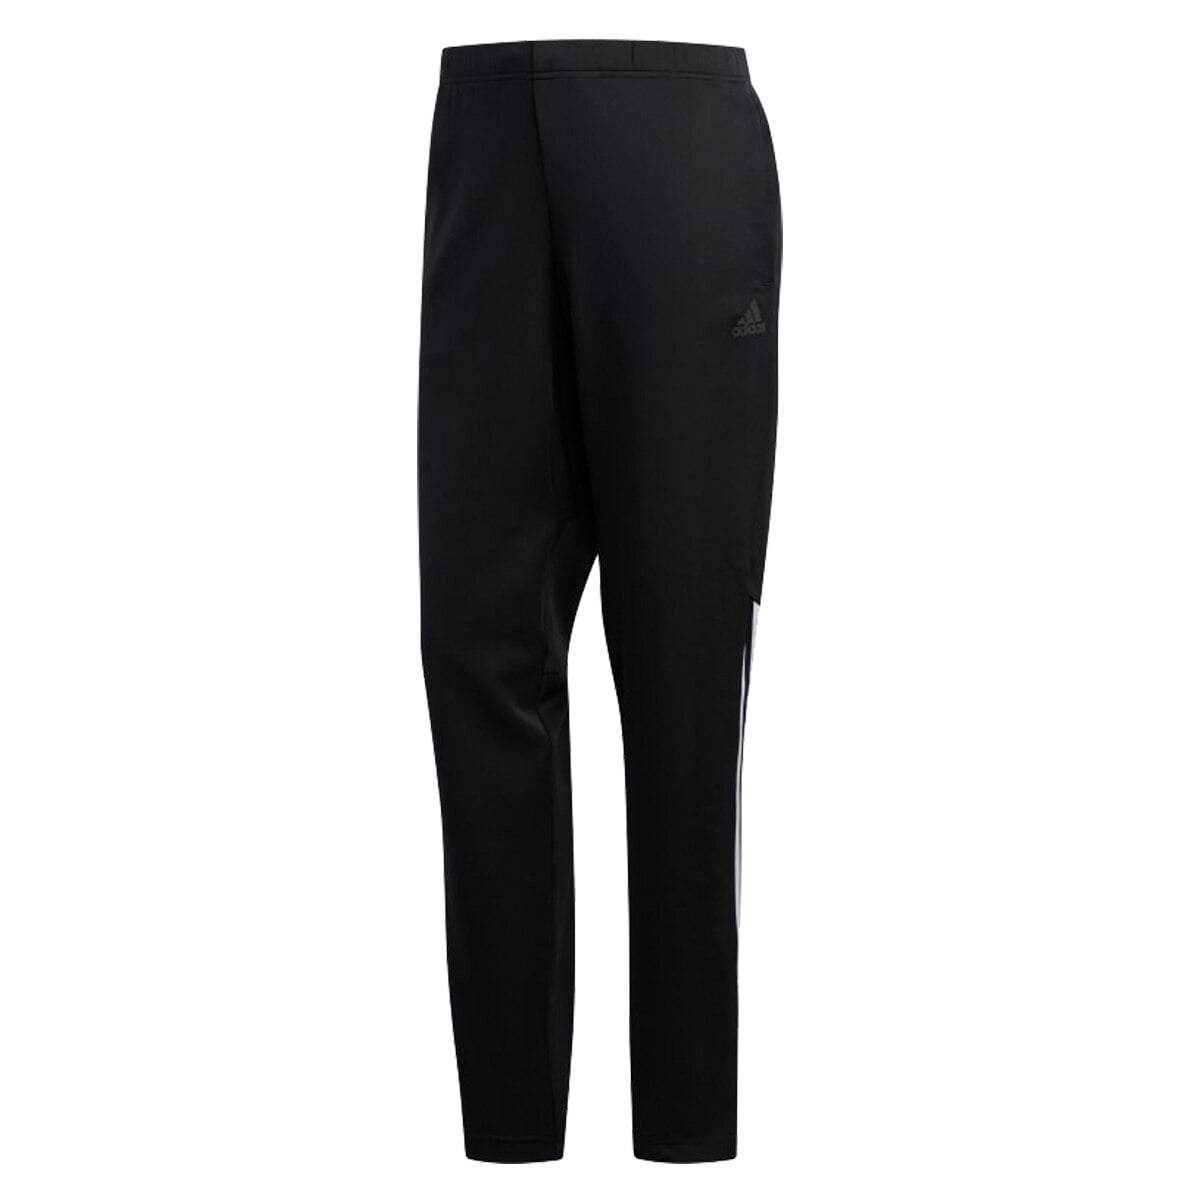 Adidas Astro 3-Stripes Men's Running Pants DM1667 - Black - Walmart.com